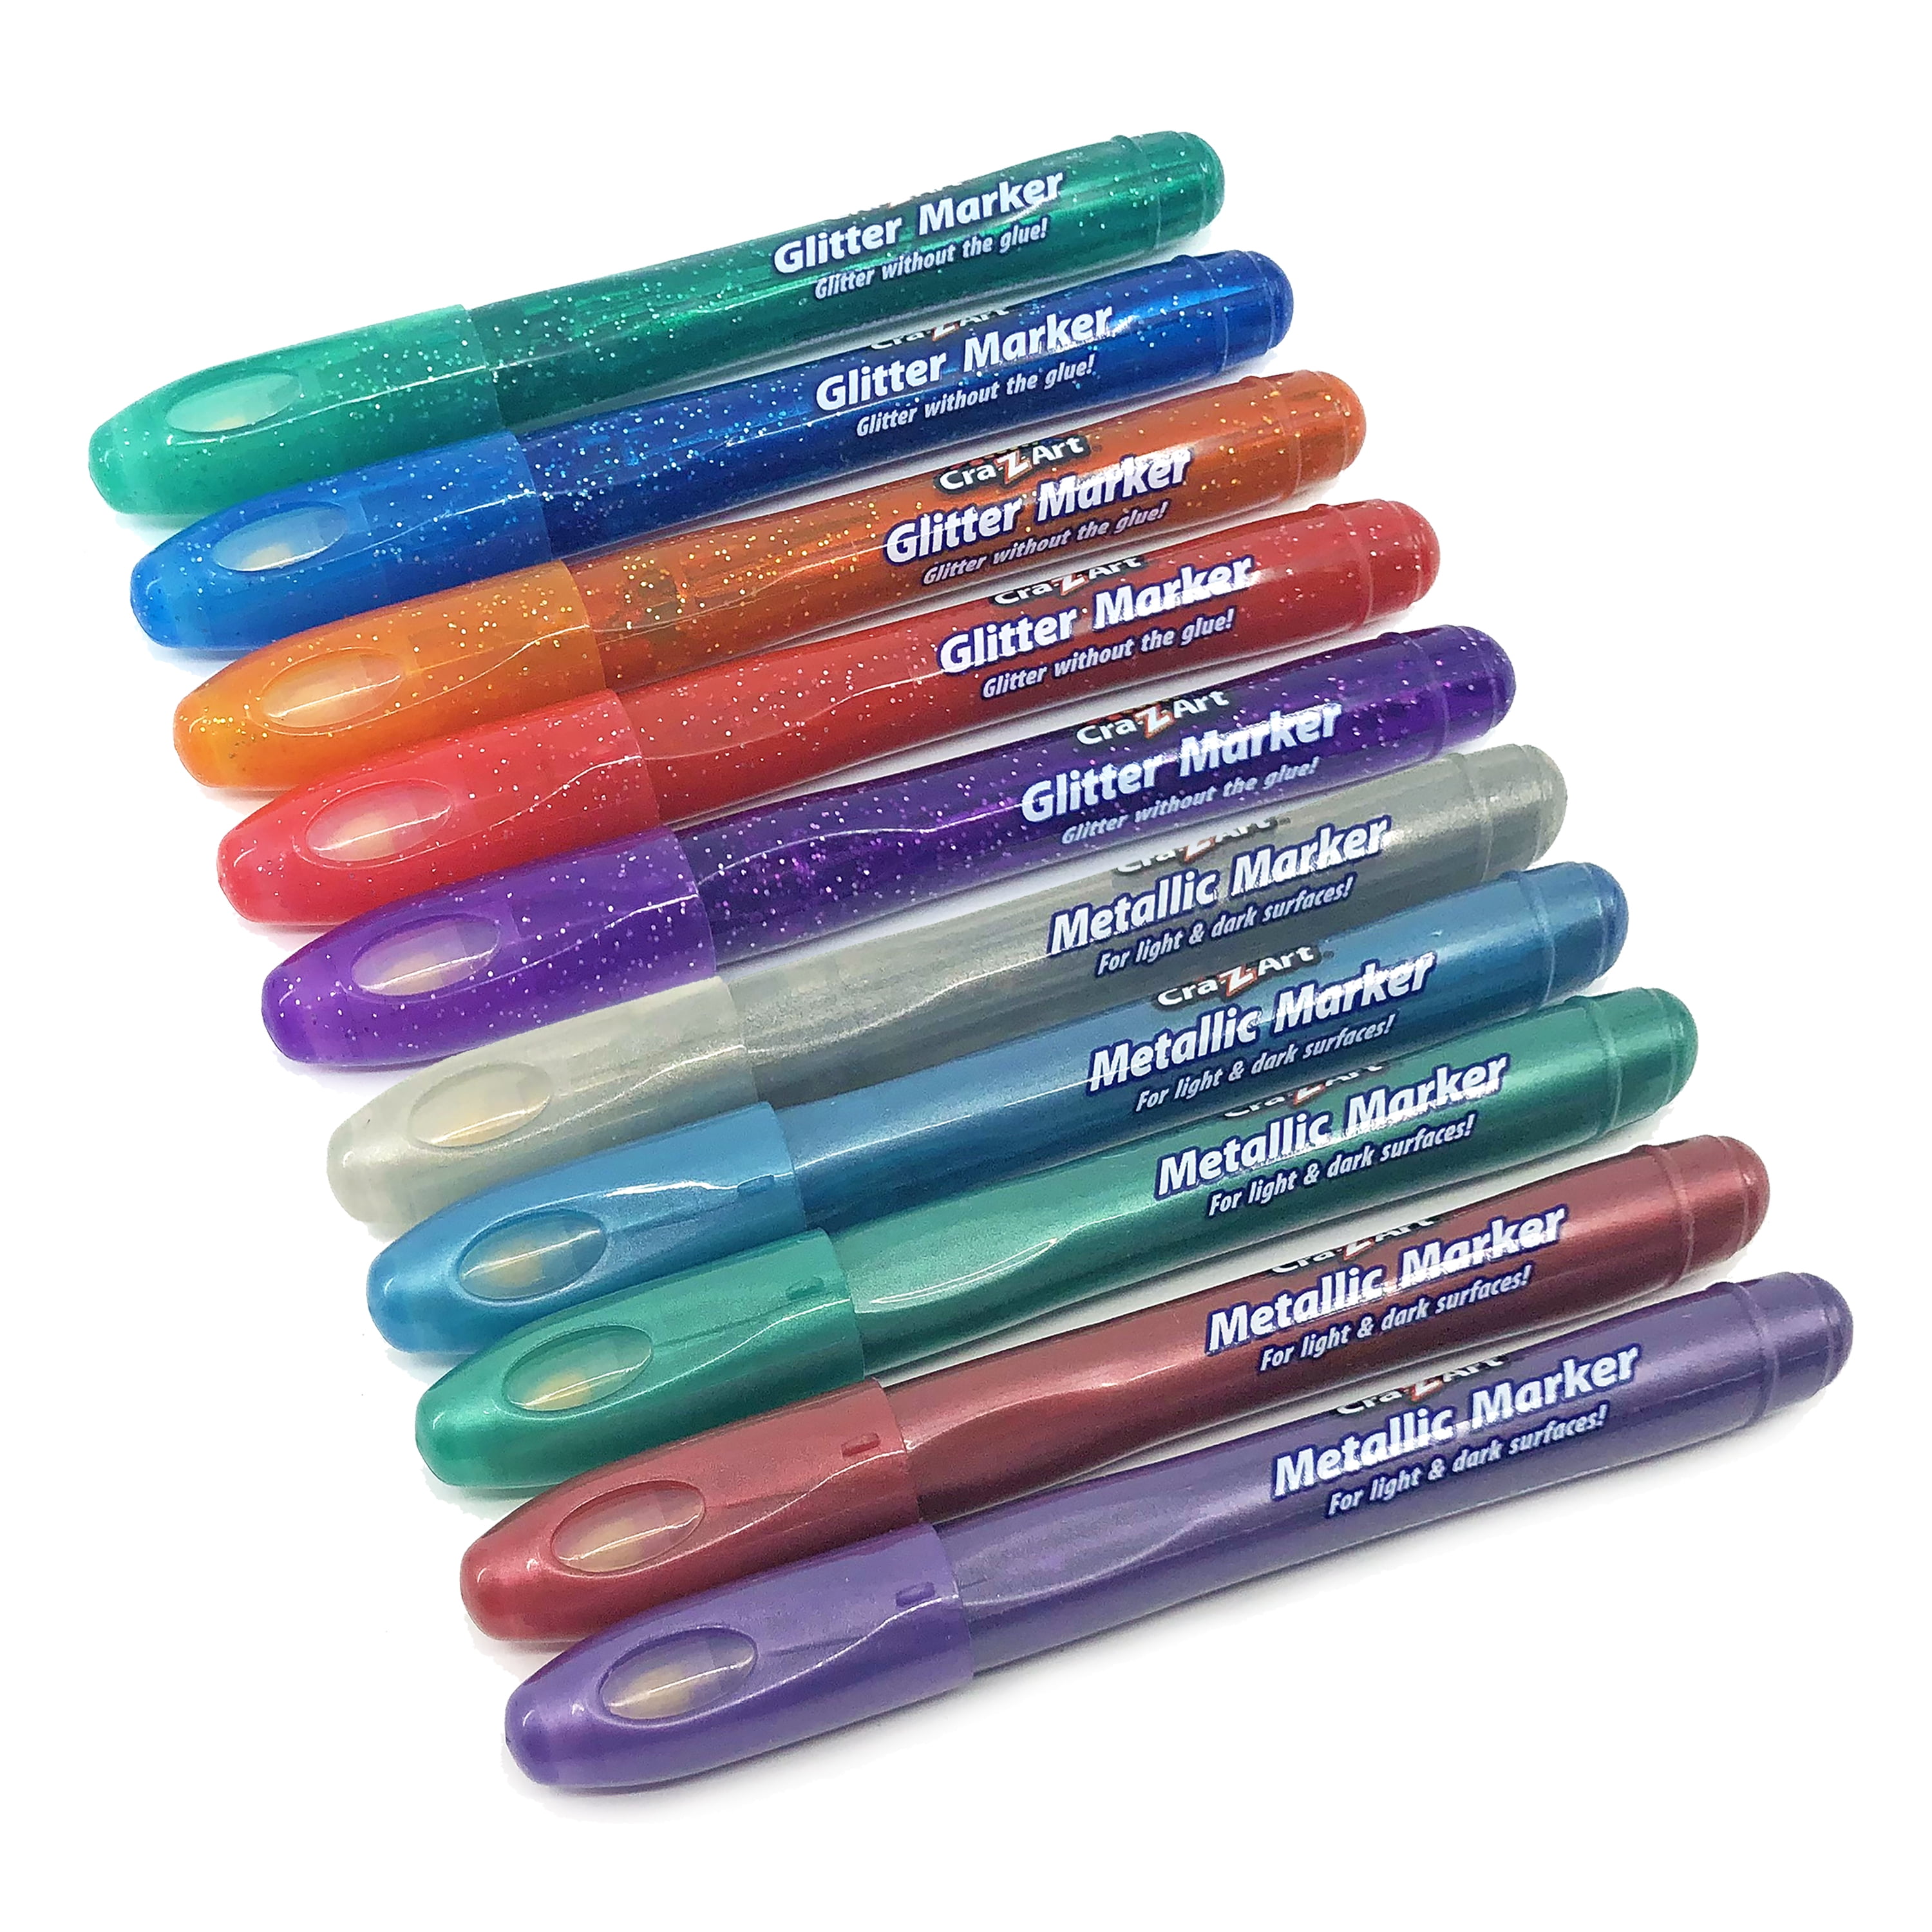 Metallic & Glitter Markers: Artistro Metalic & Glitter Painter Pens